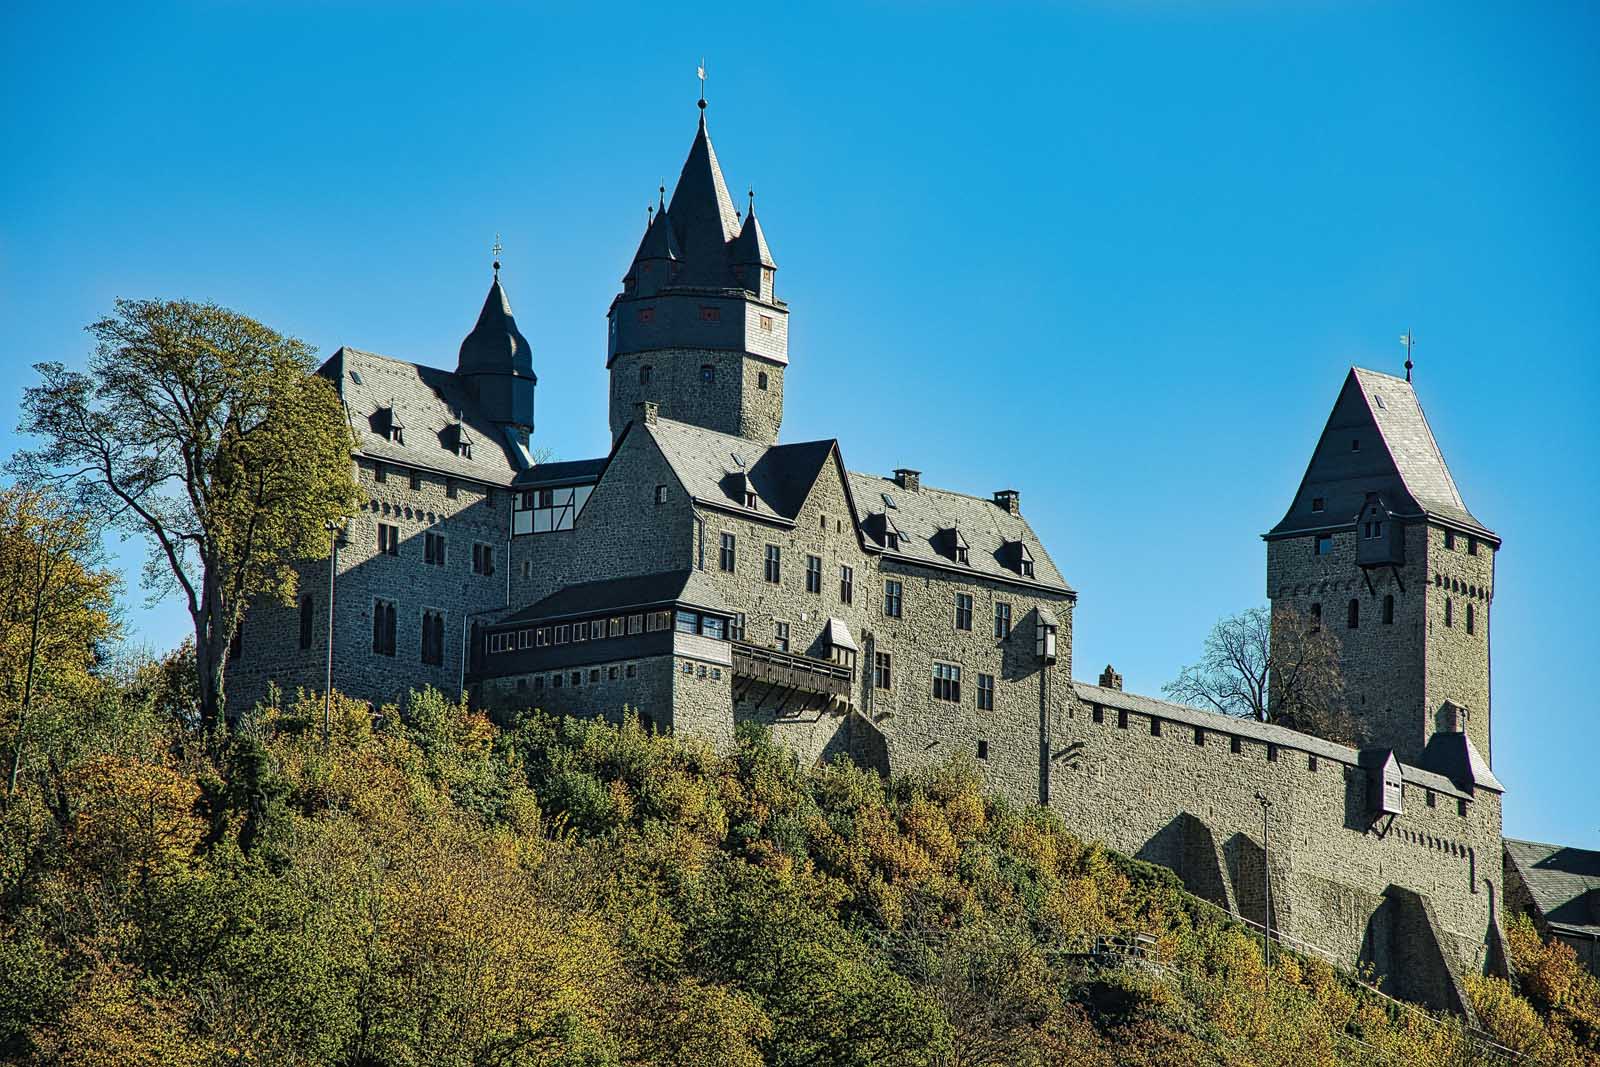 Altena Castle in Germany